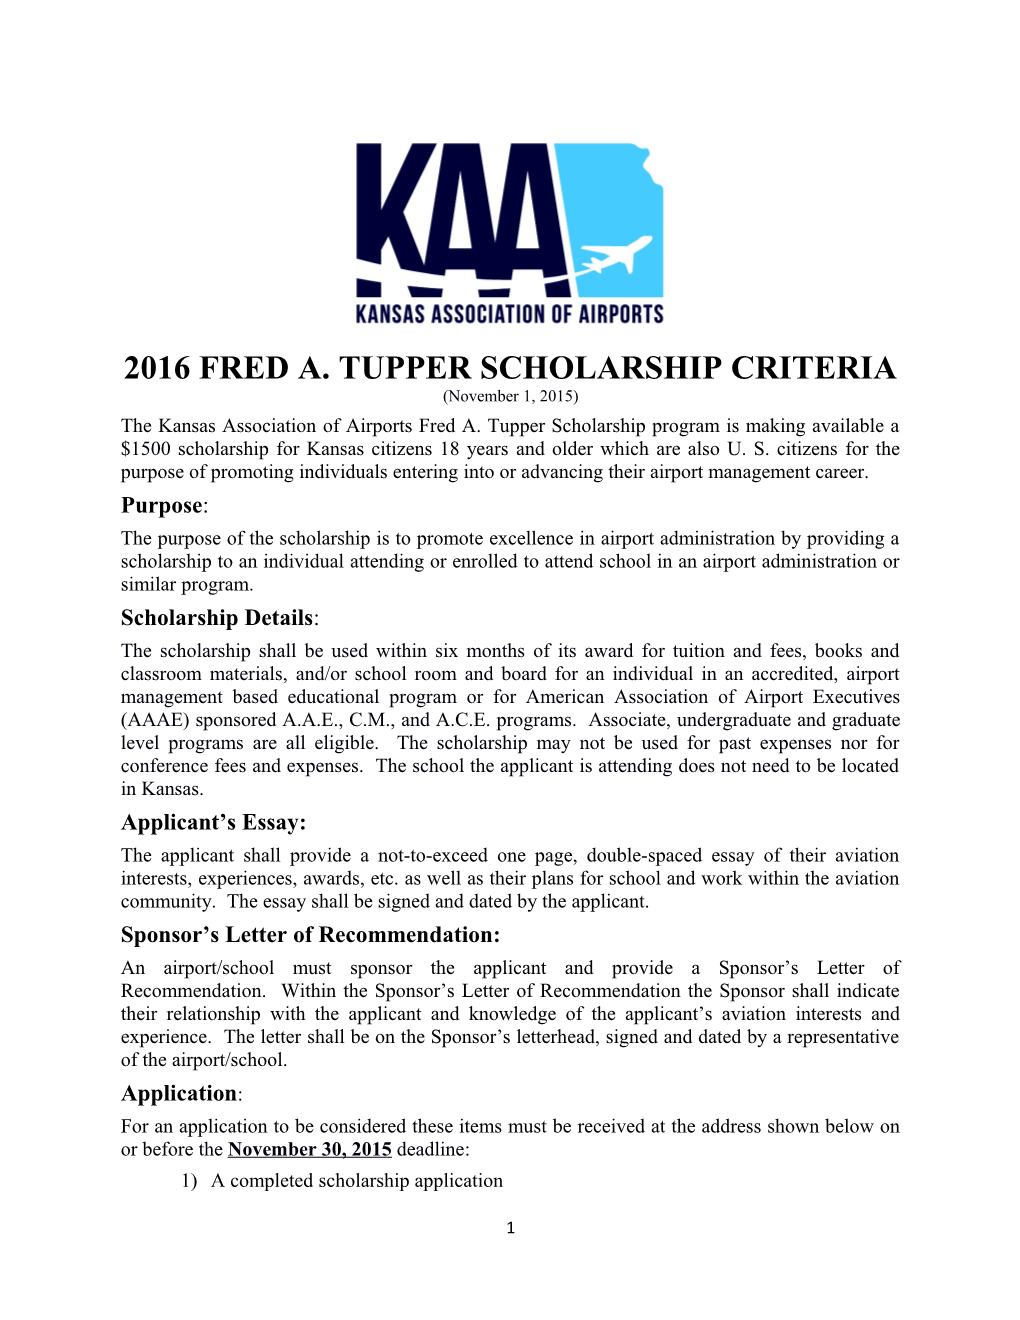 2016Fred A. Tupper Scholarship Criteria